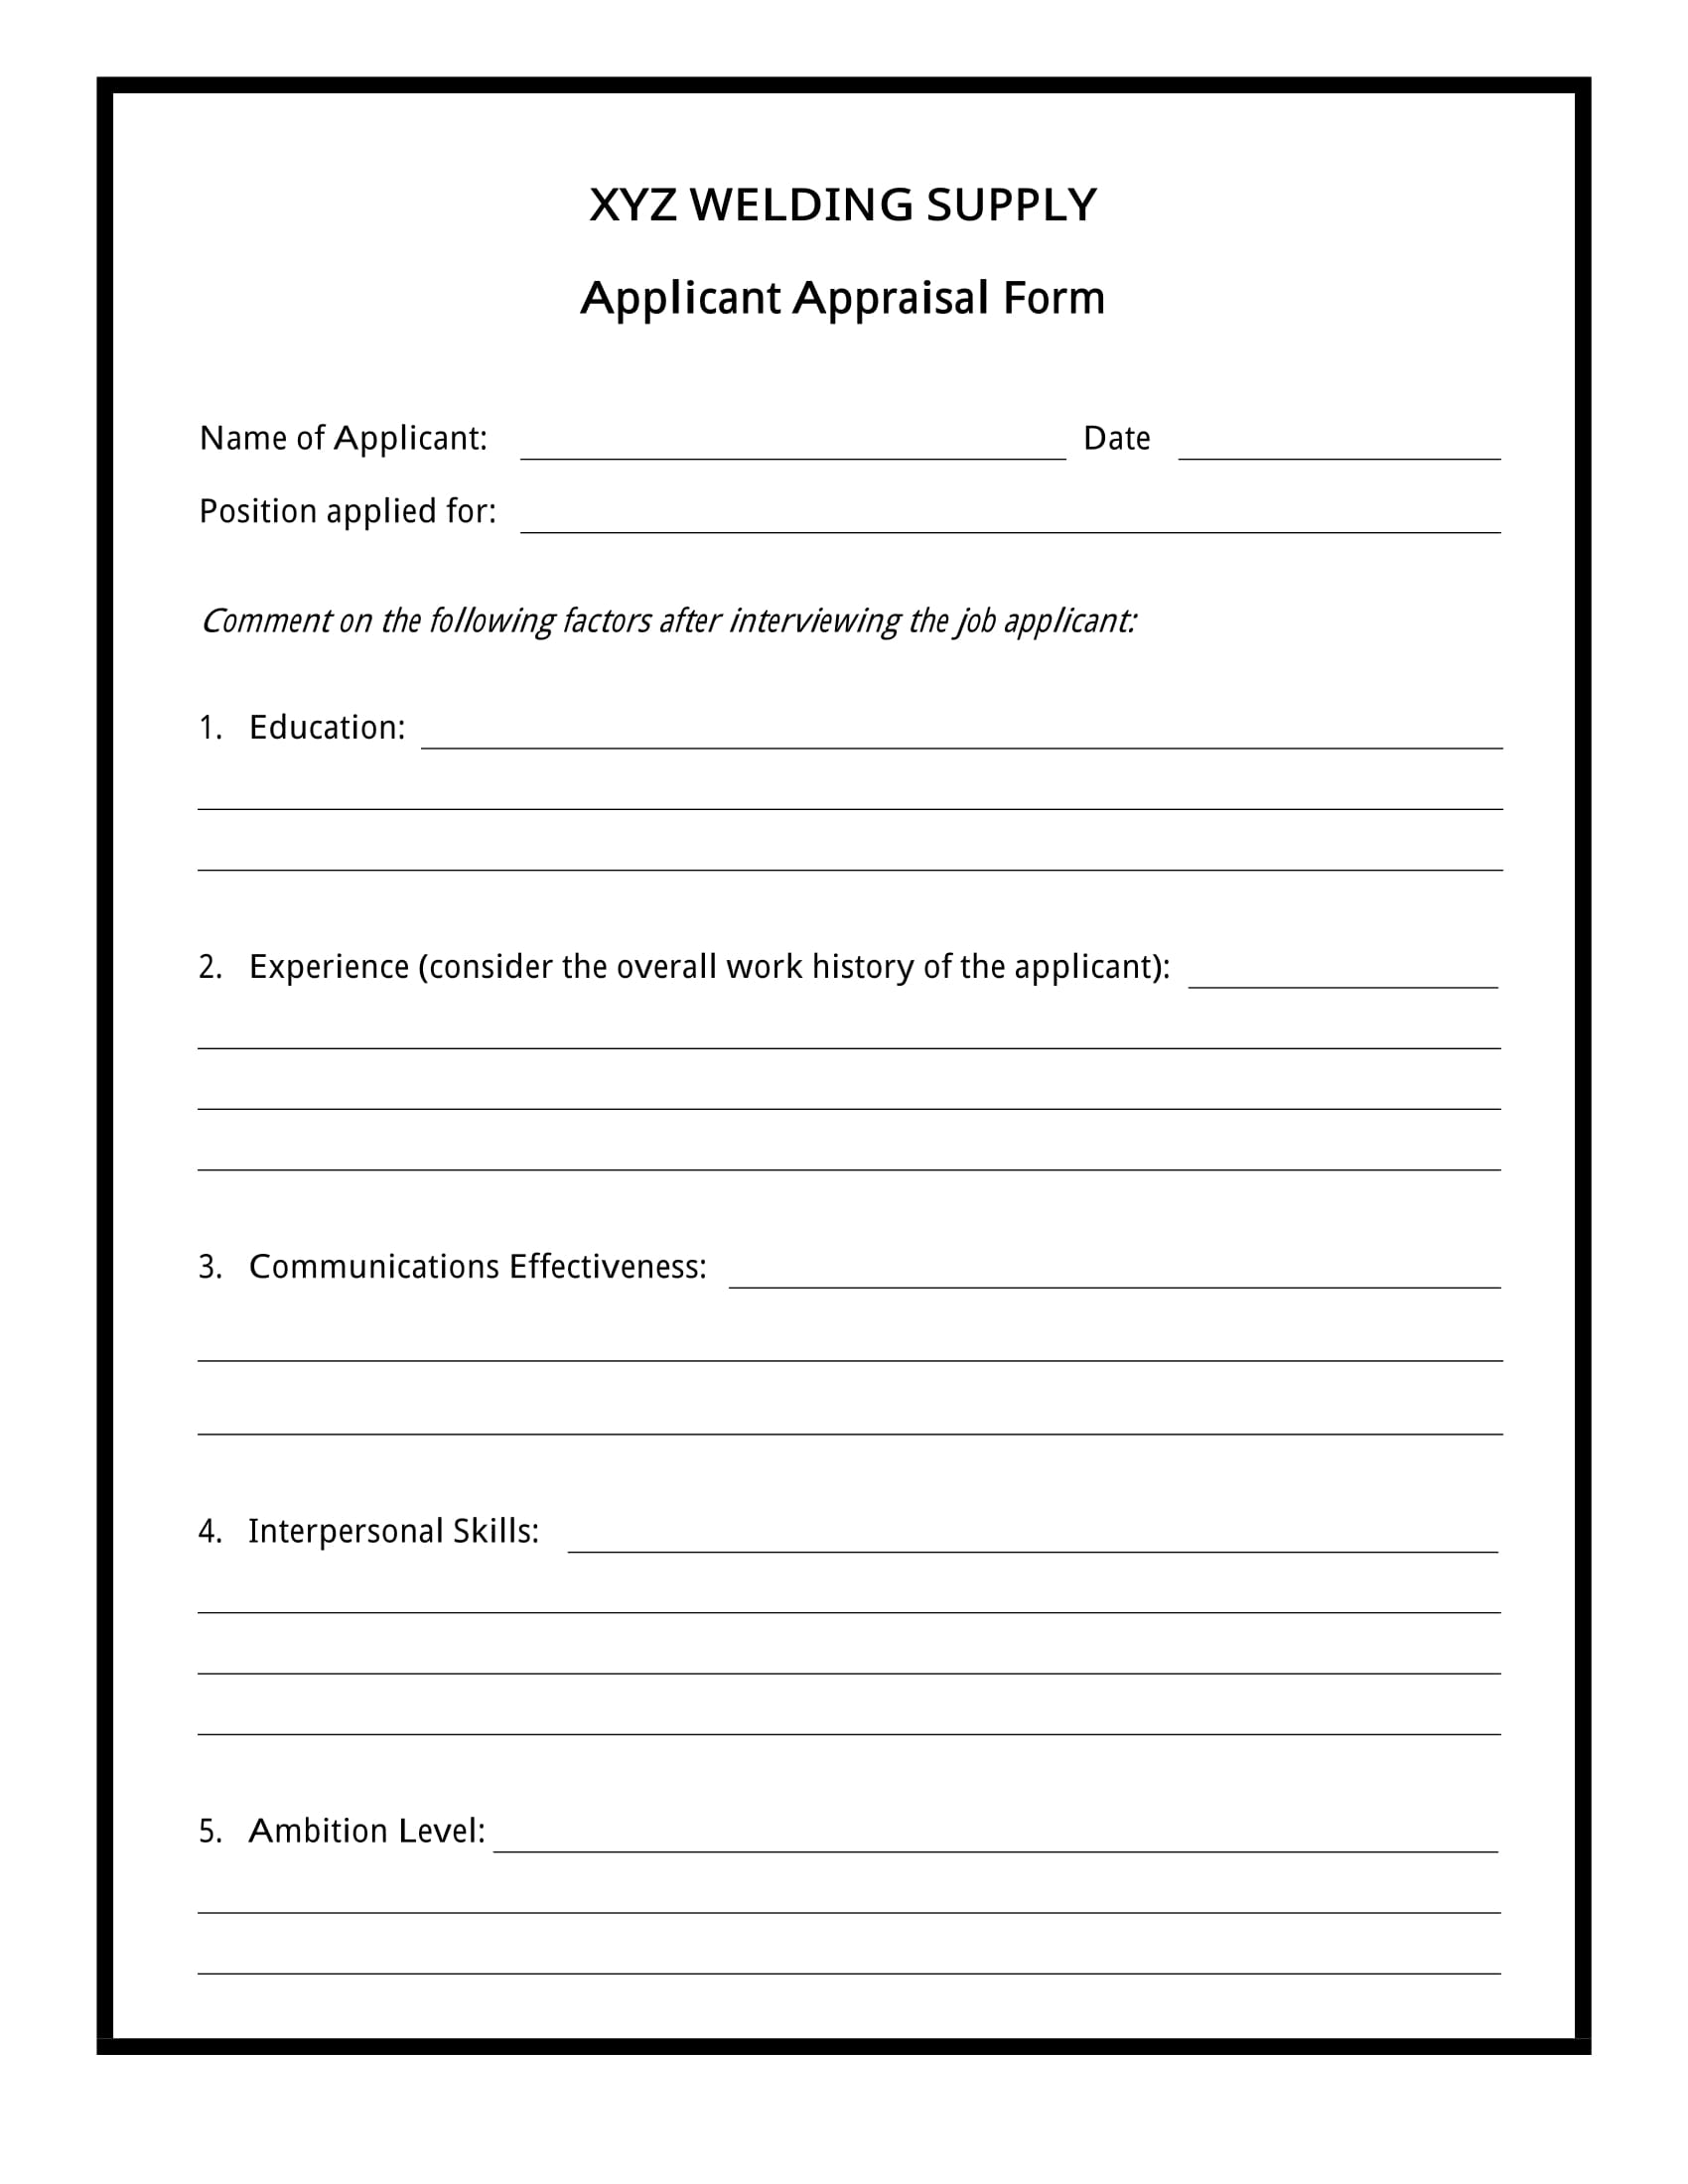 applicant appraisal form sample 1